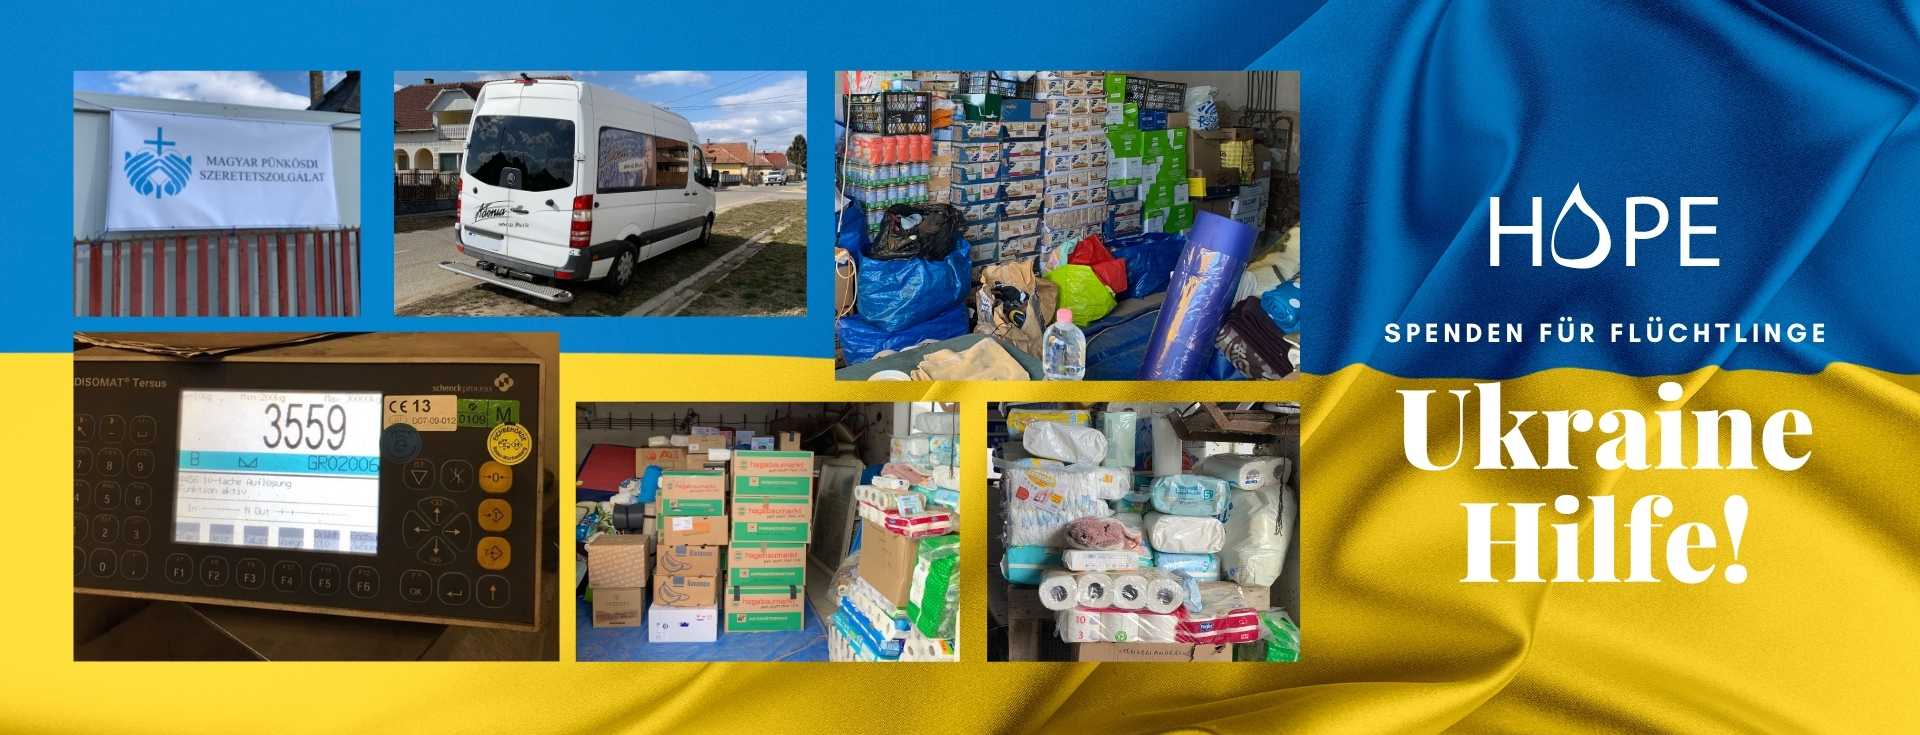 Help for Ukraine, Spenden, Notlindern, Flüchtlingshilfe, Krieg